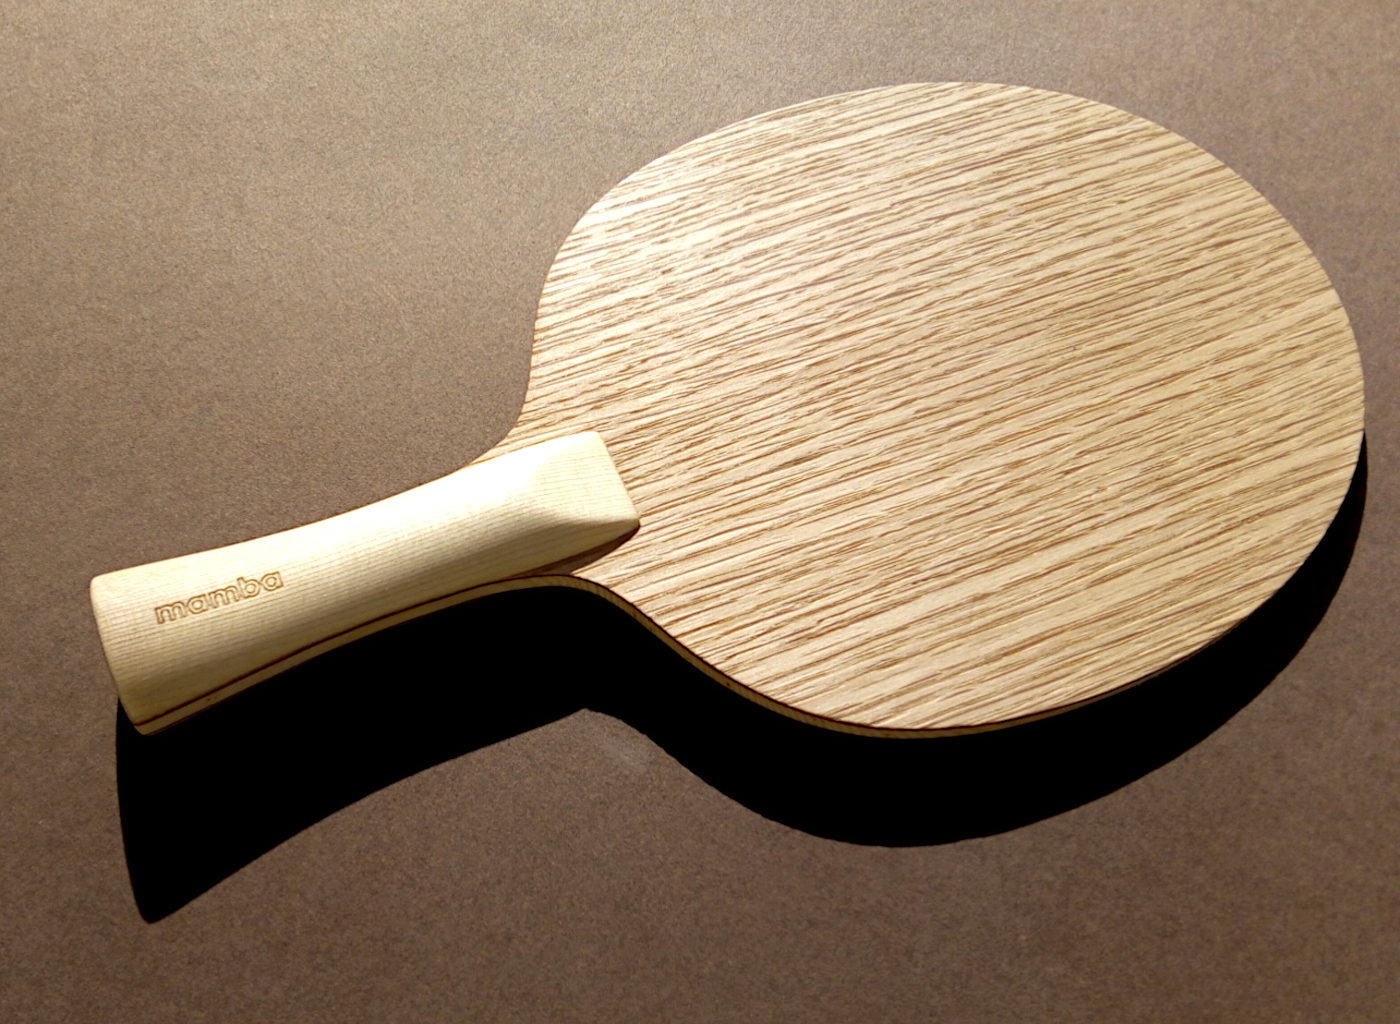 Comprar una madera de tenis de mesa Mamba Blades